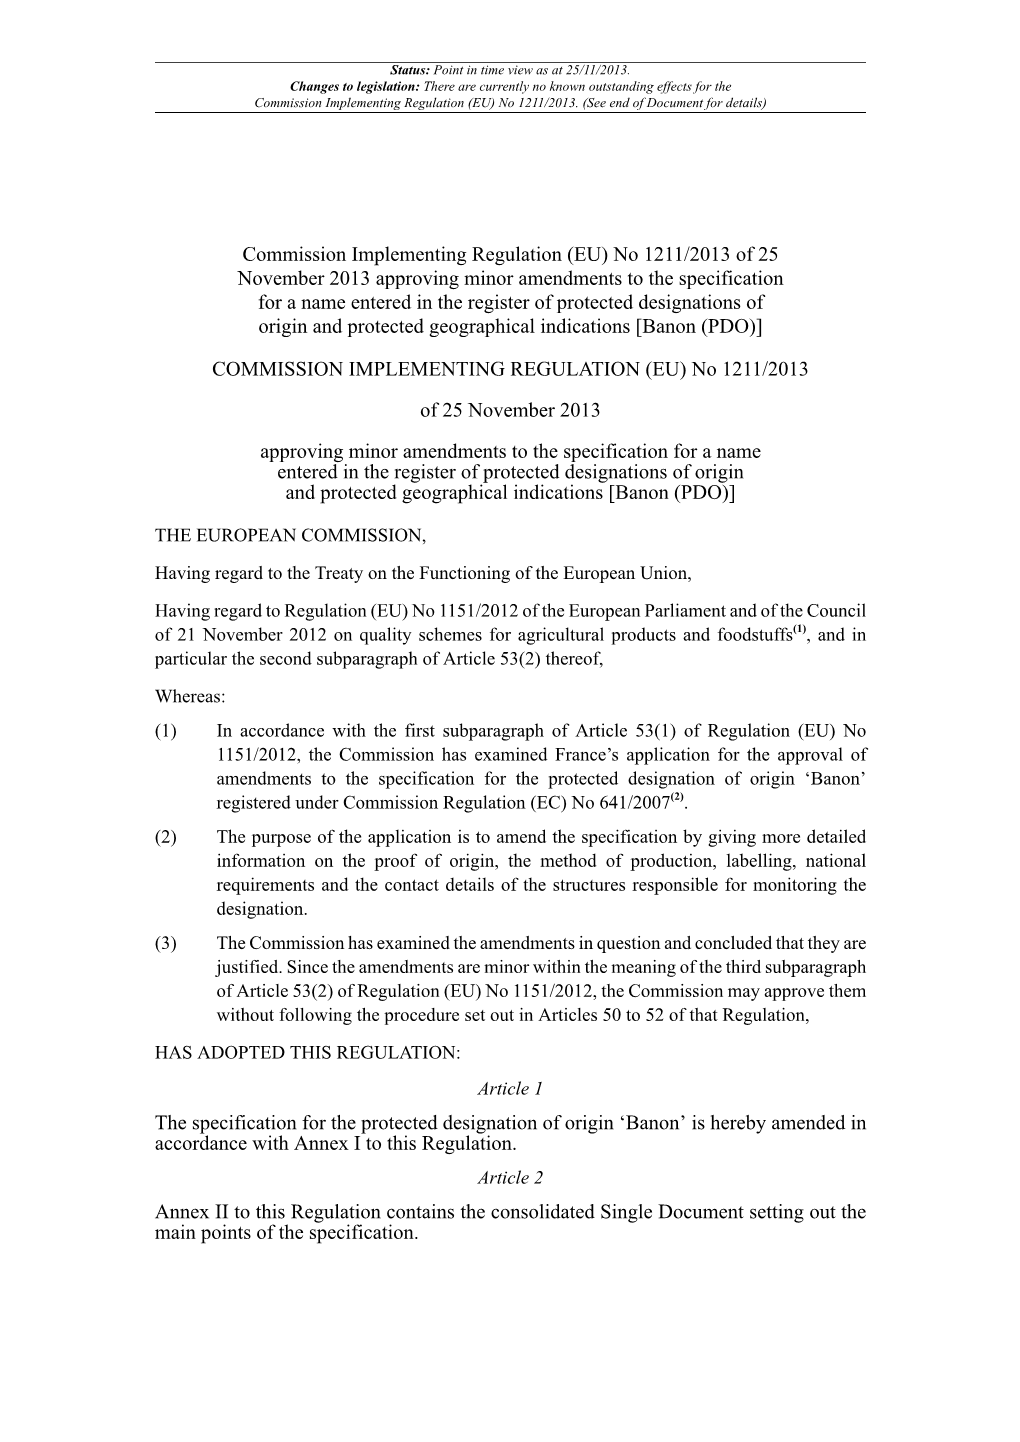 Commission Implementing Regulation (EU) No 1211/2013